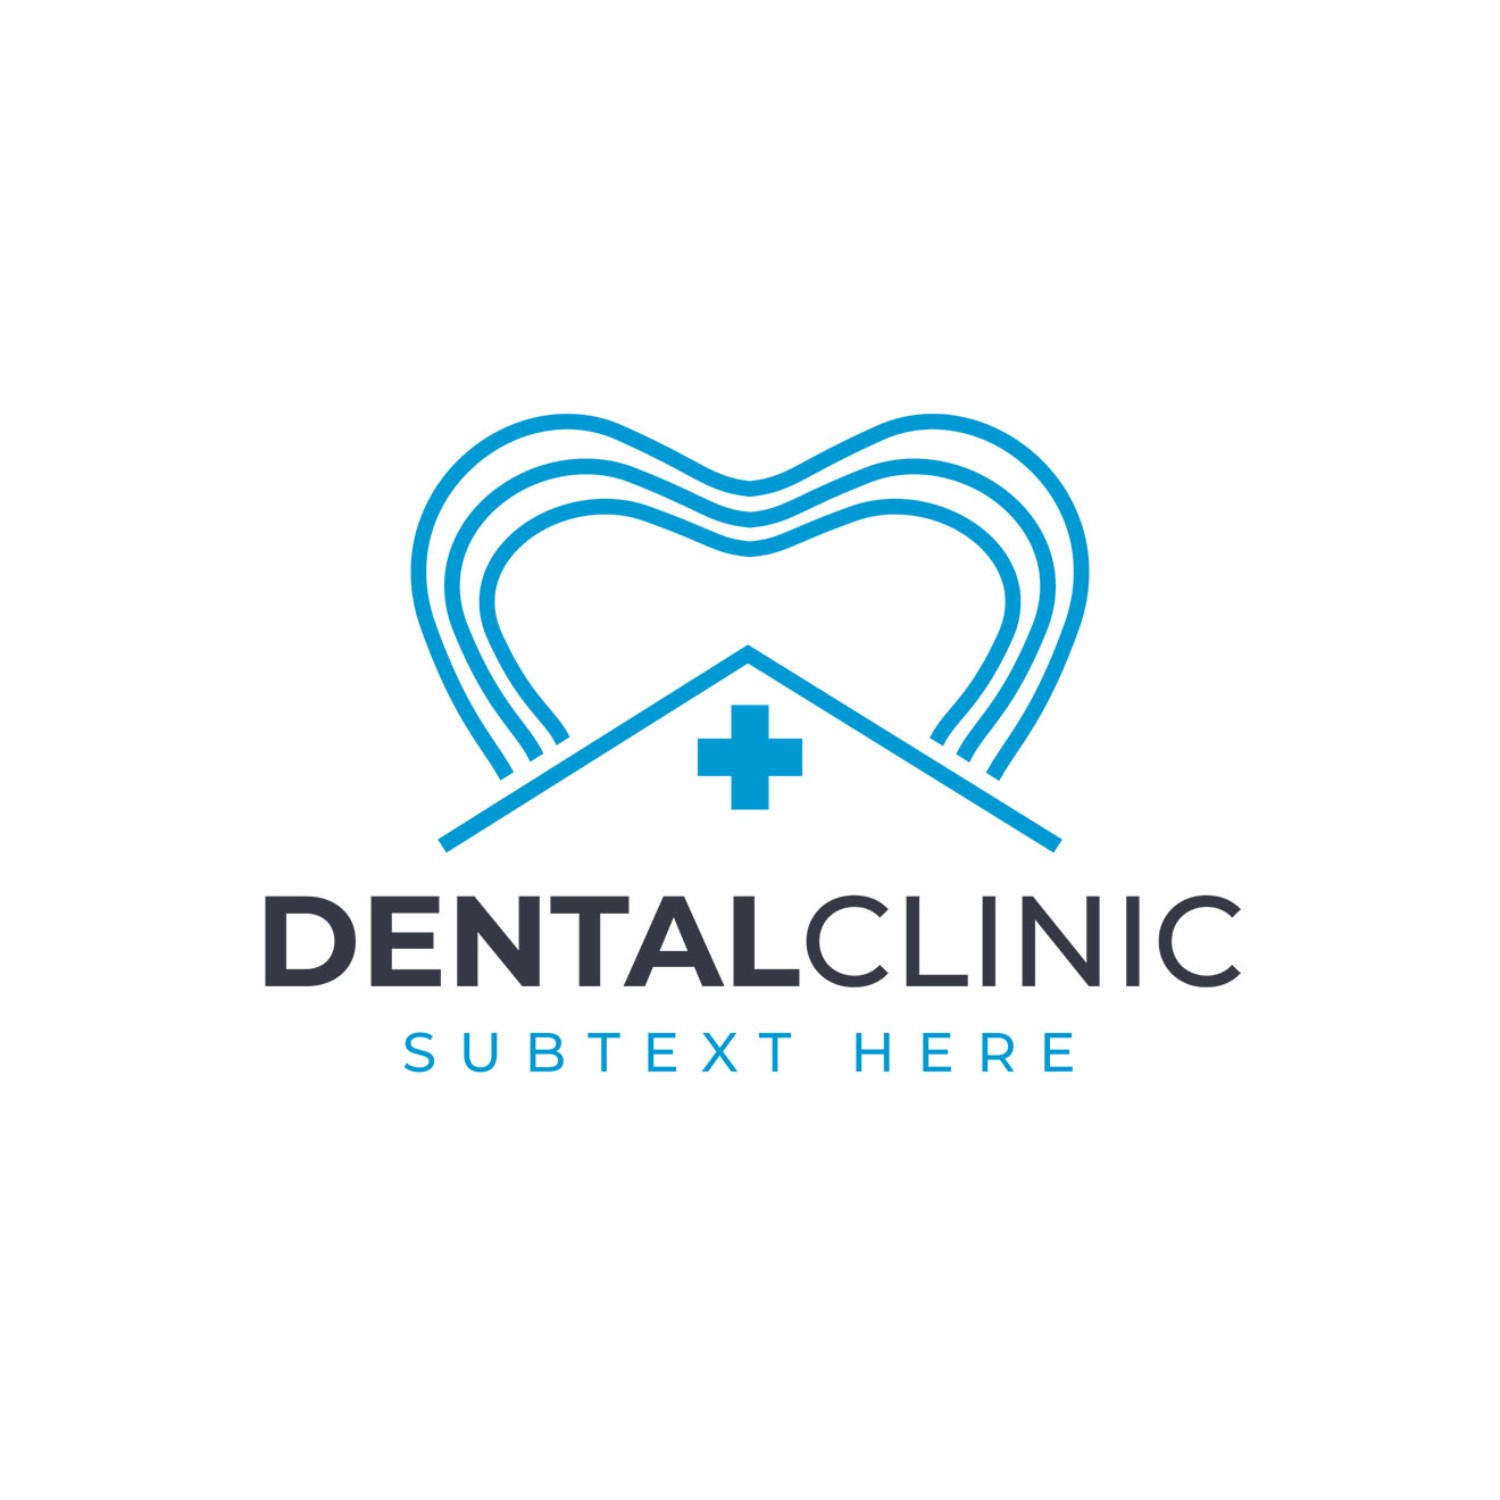 Dental Clinic Vector Logo Template main cover.